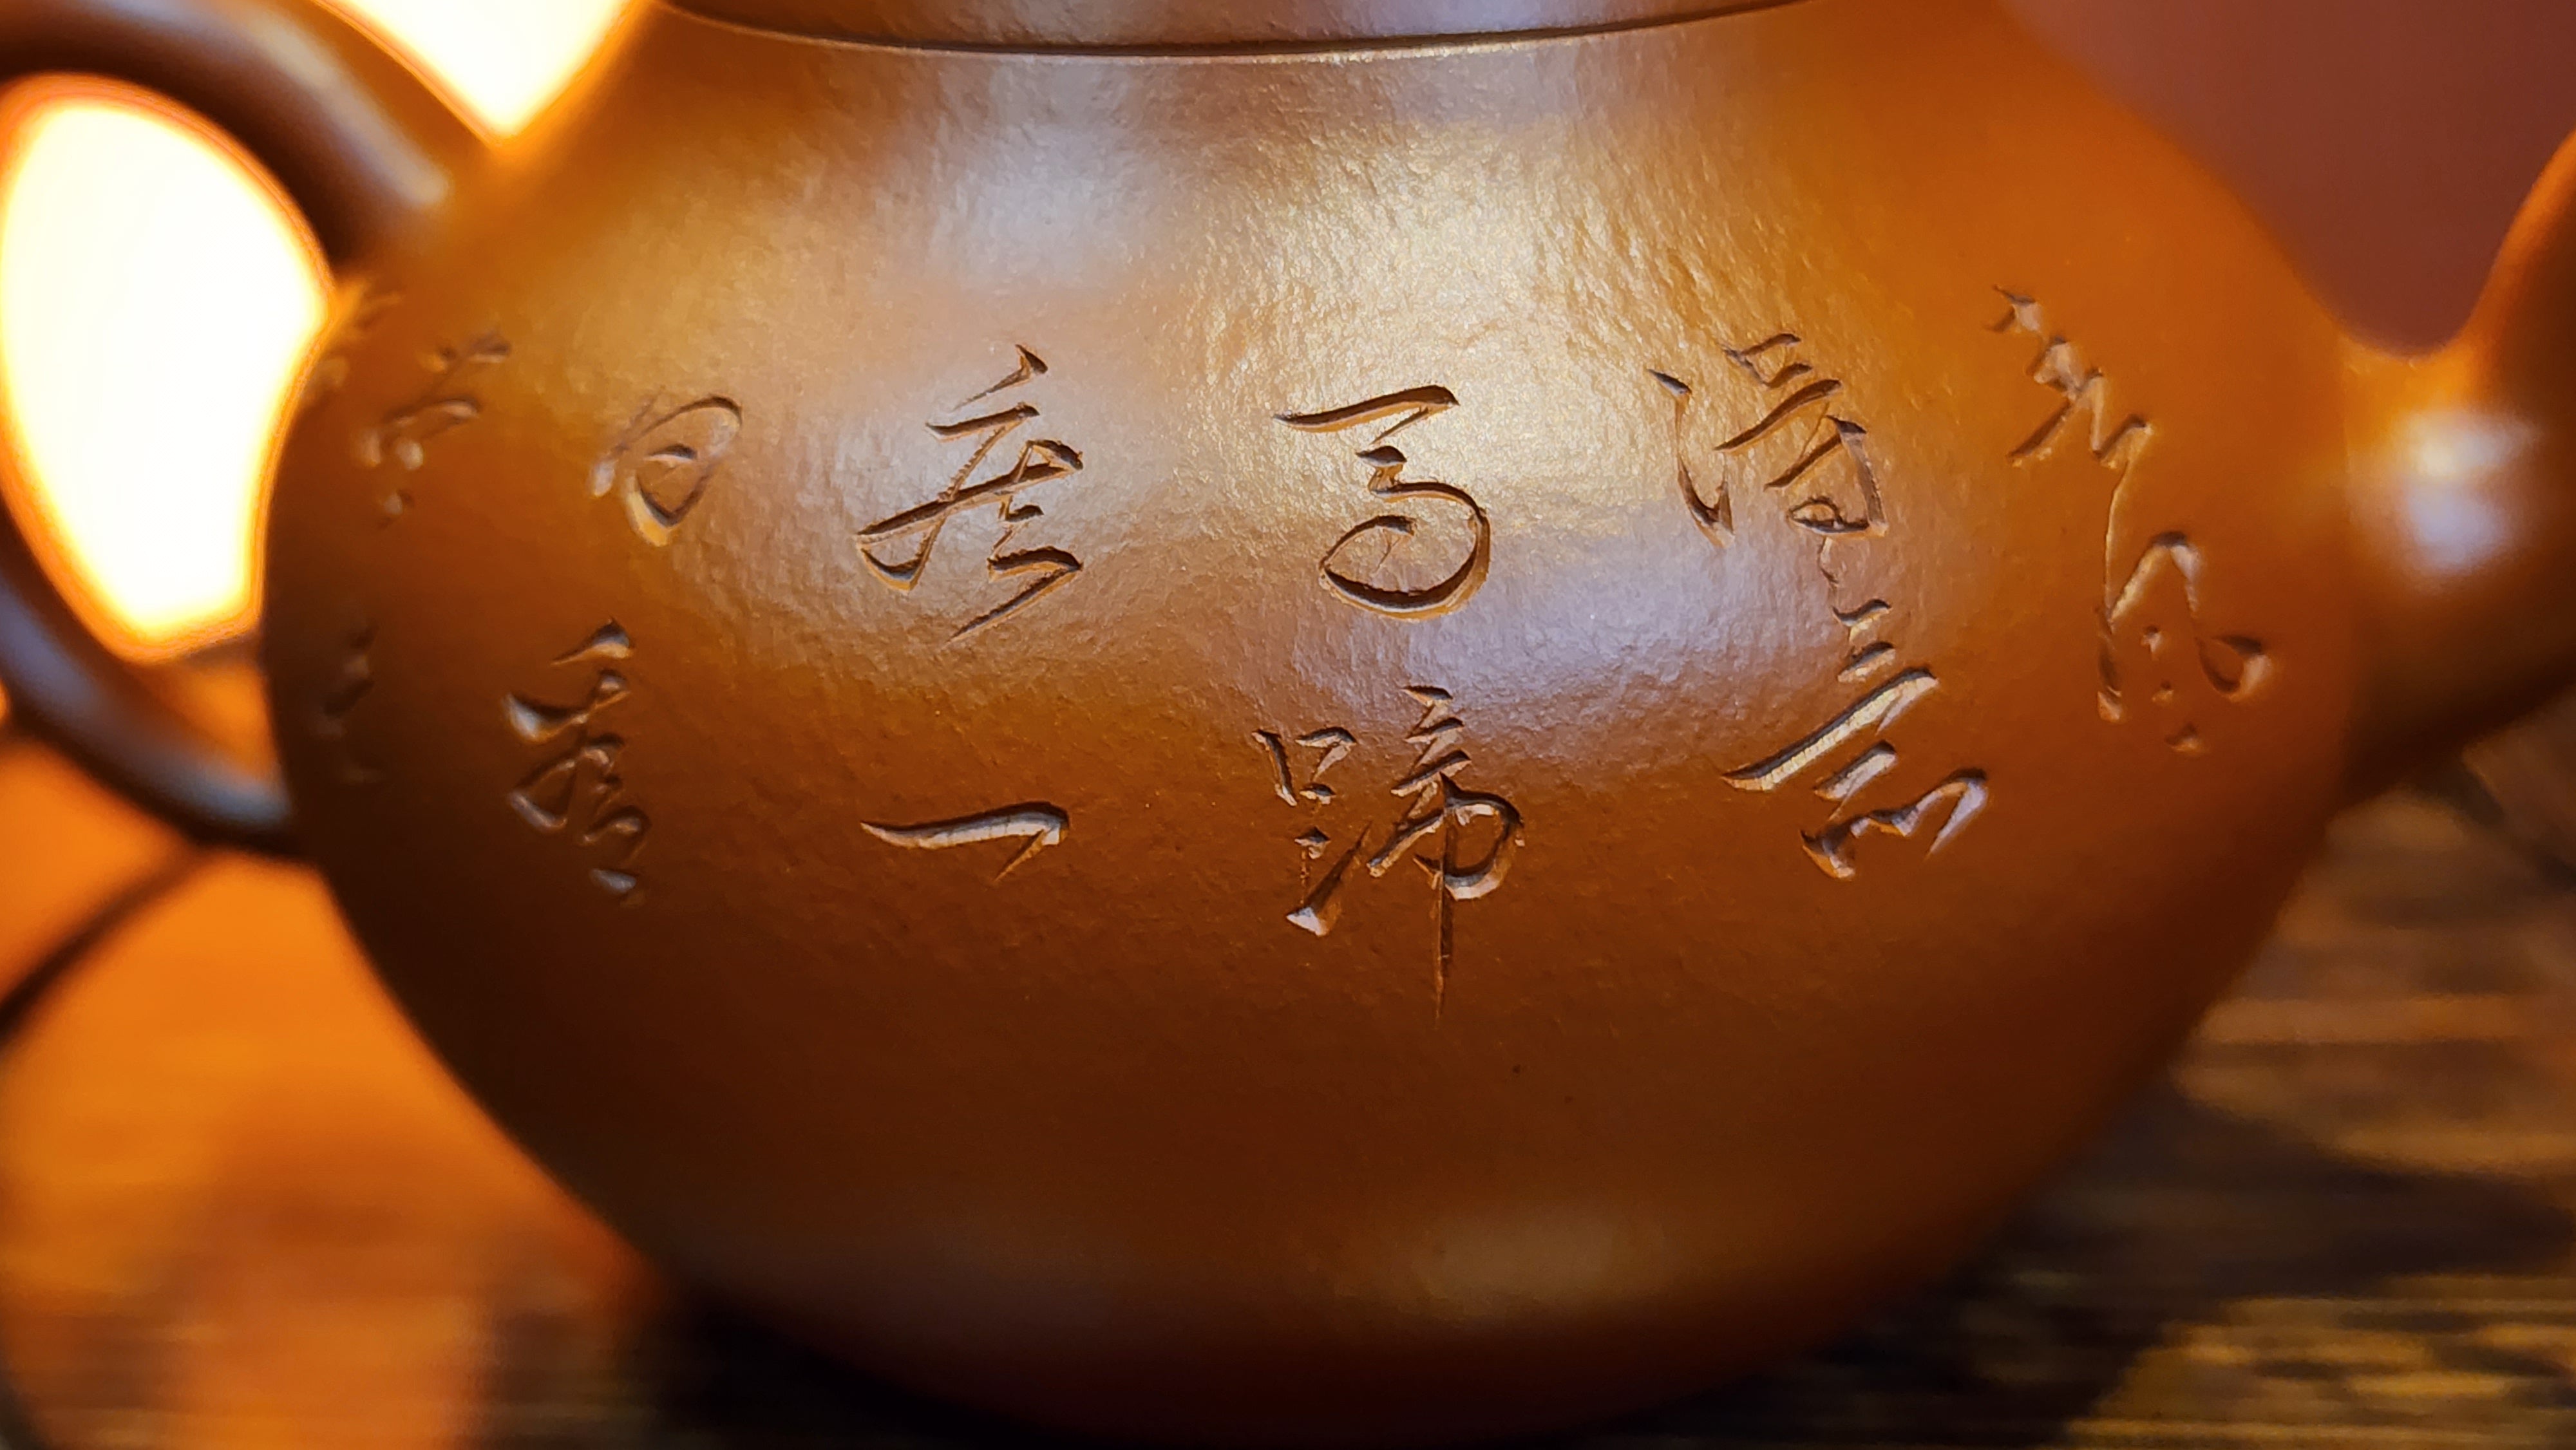 Li Xing 梨形, 151.2ml, ZhaoZhuang ZhuNi 赵庄朱泥, by Craftsman Zhao Xiao Wei 赵小卫 + Bamboo Engraving and Inscription by L4 Artist Xing Su 行素。